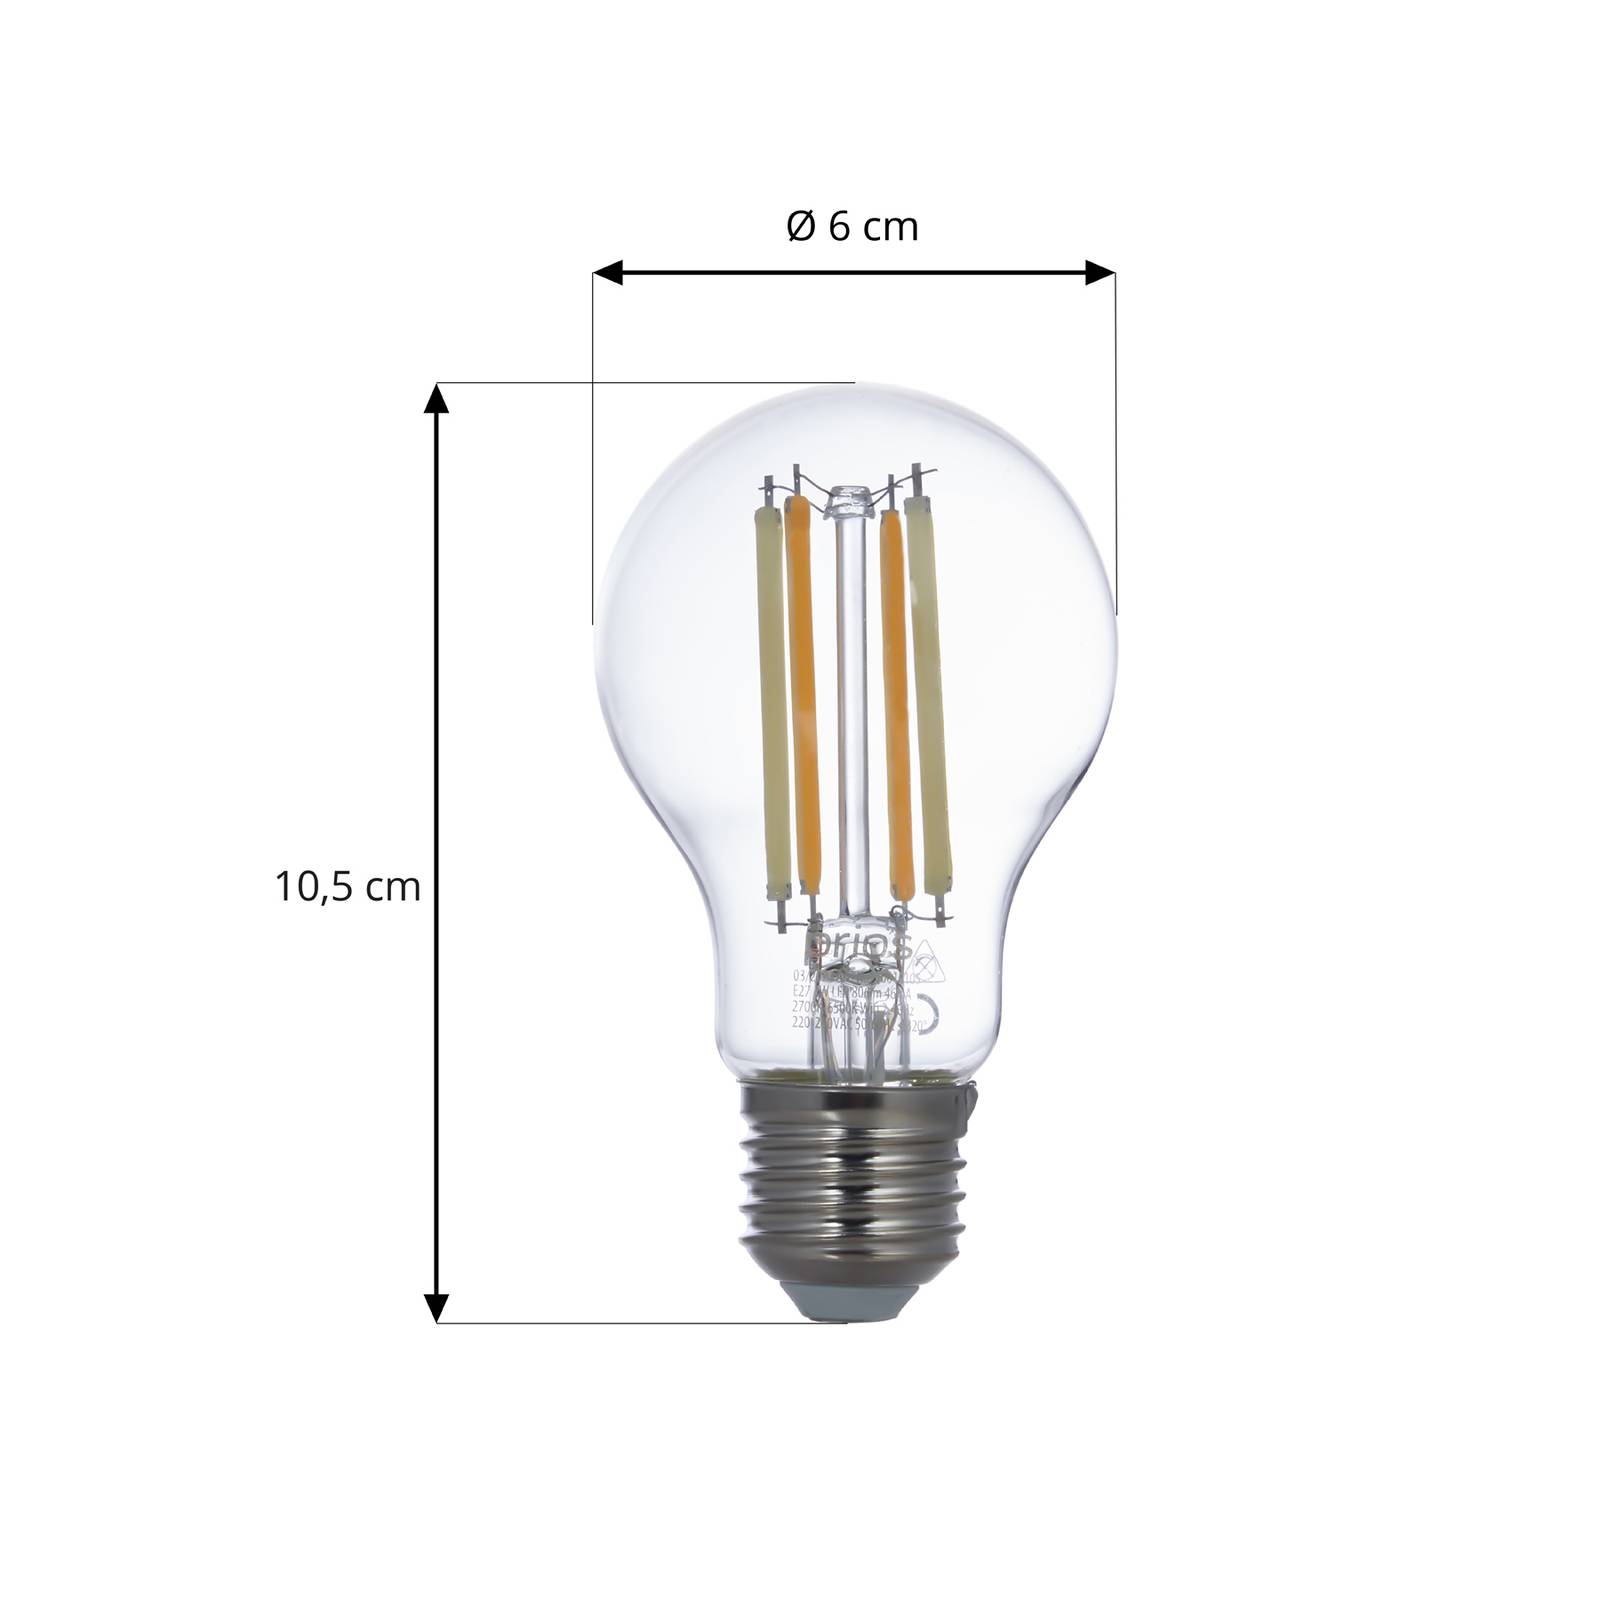 PRIOS Smart E27 A60 LED lamp 7W tunable white WLAN